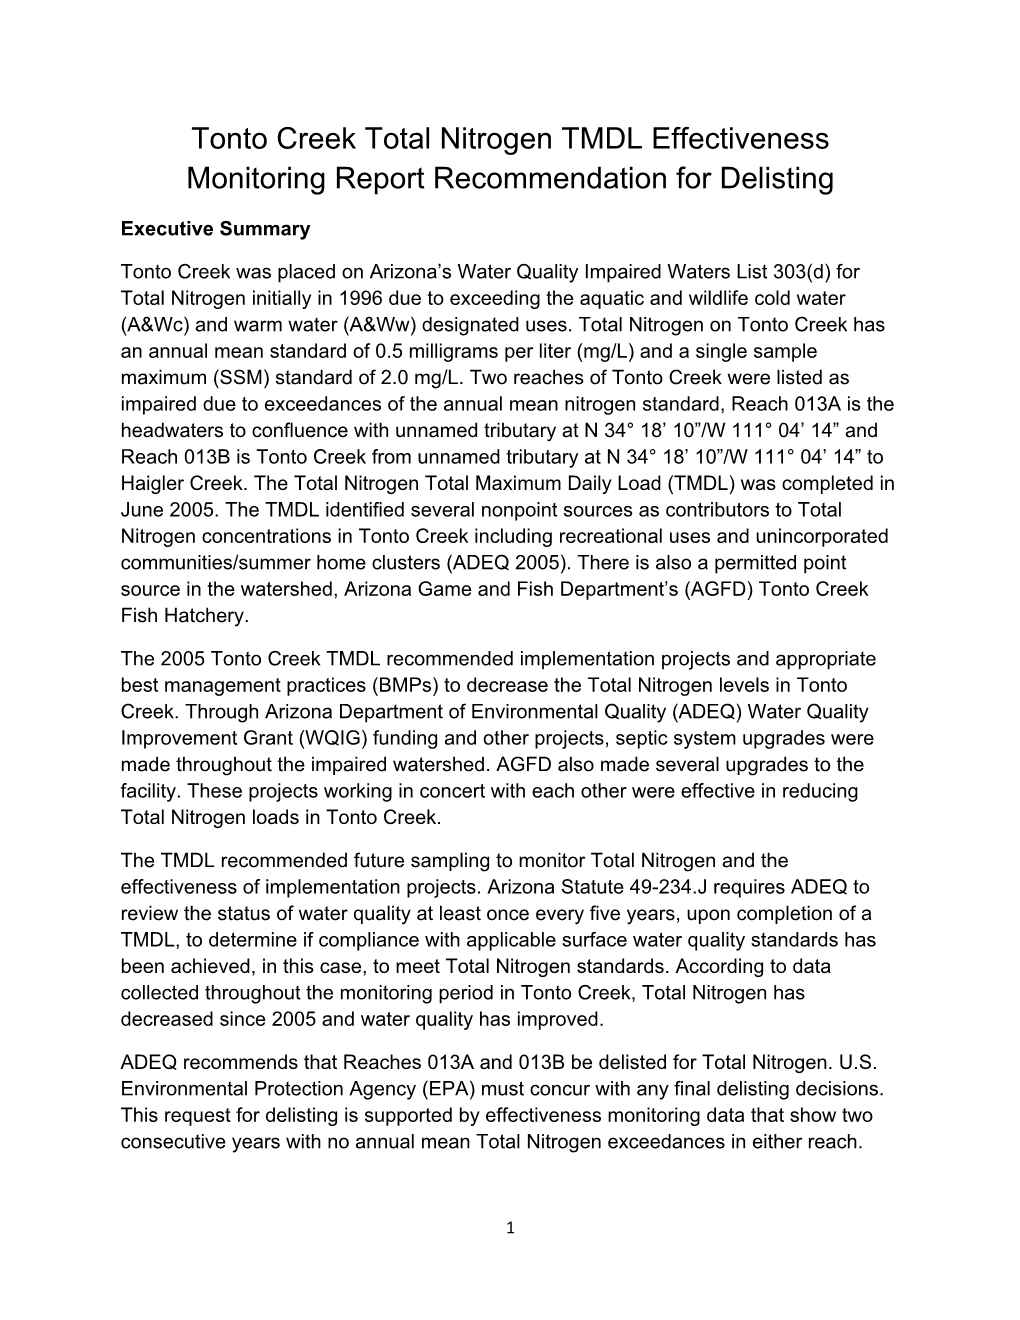 Tonto Creek Total Nitrogen TMDL Effectiveness Monitoring Report Recommendation for Delisting